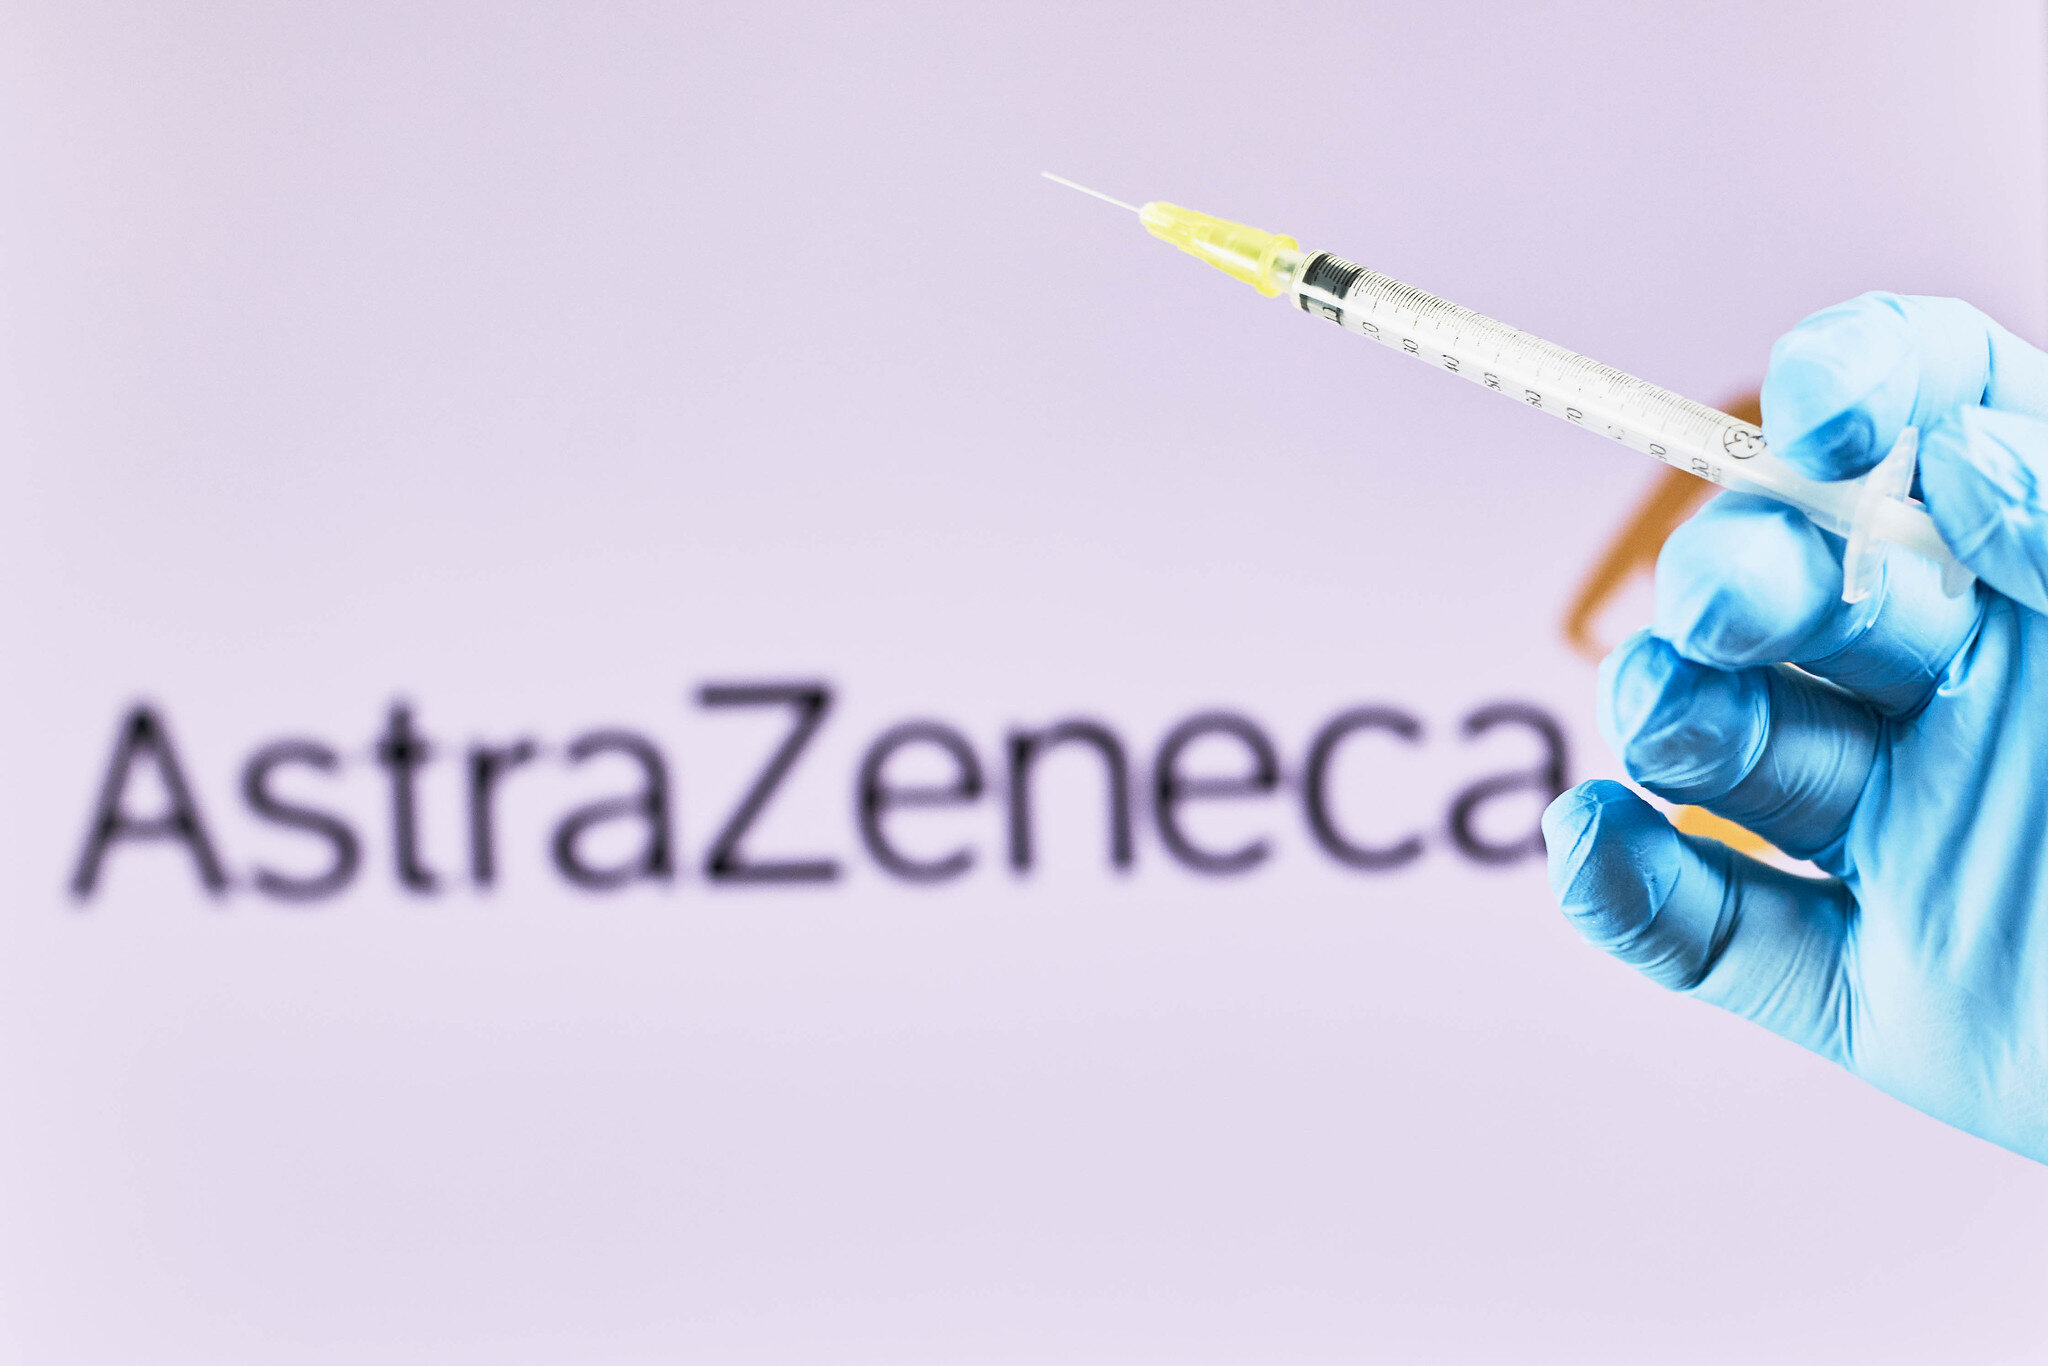 Poland donated AstraZeneca vaccines to Egypt